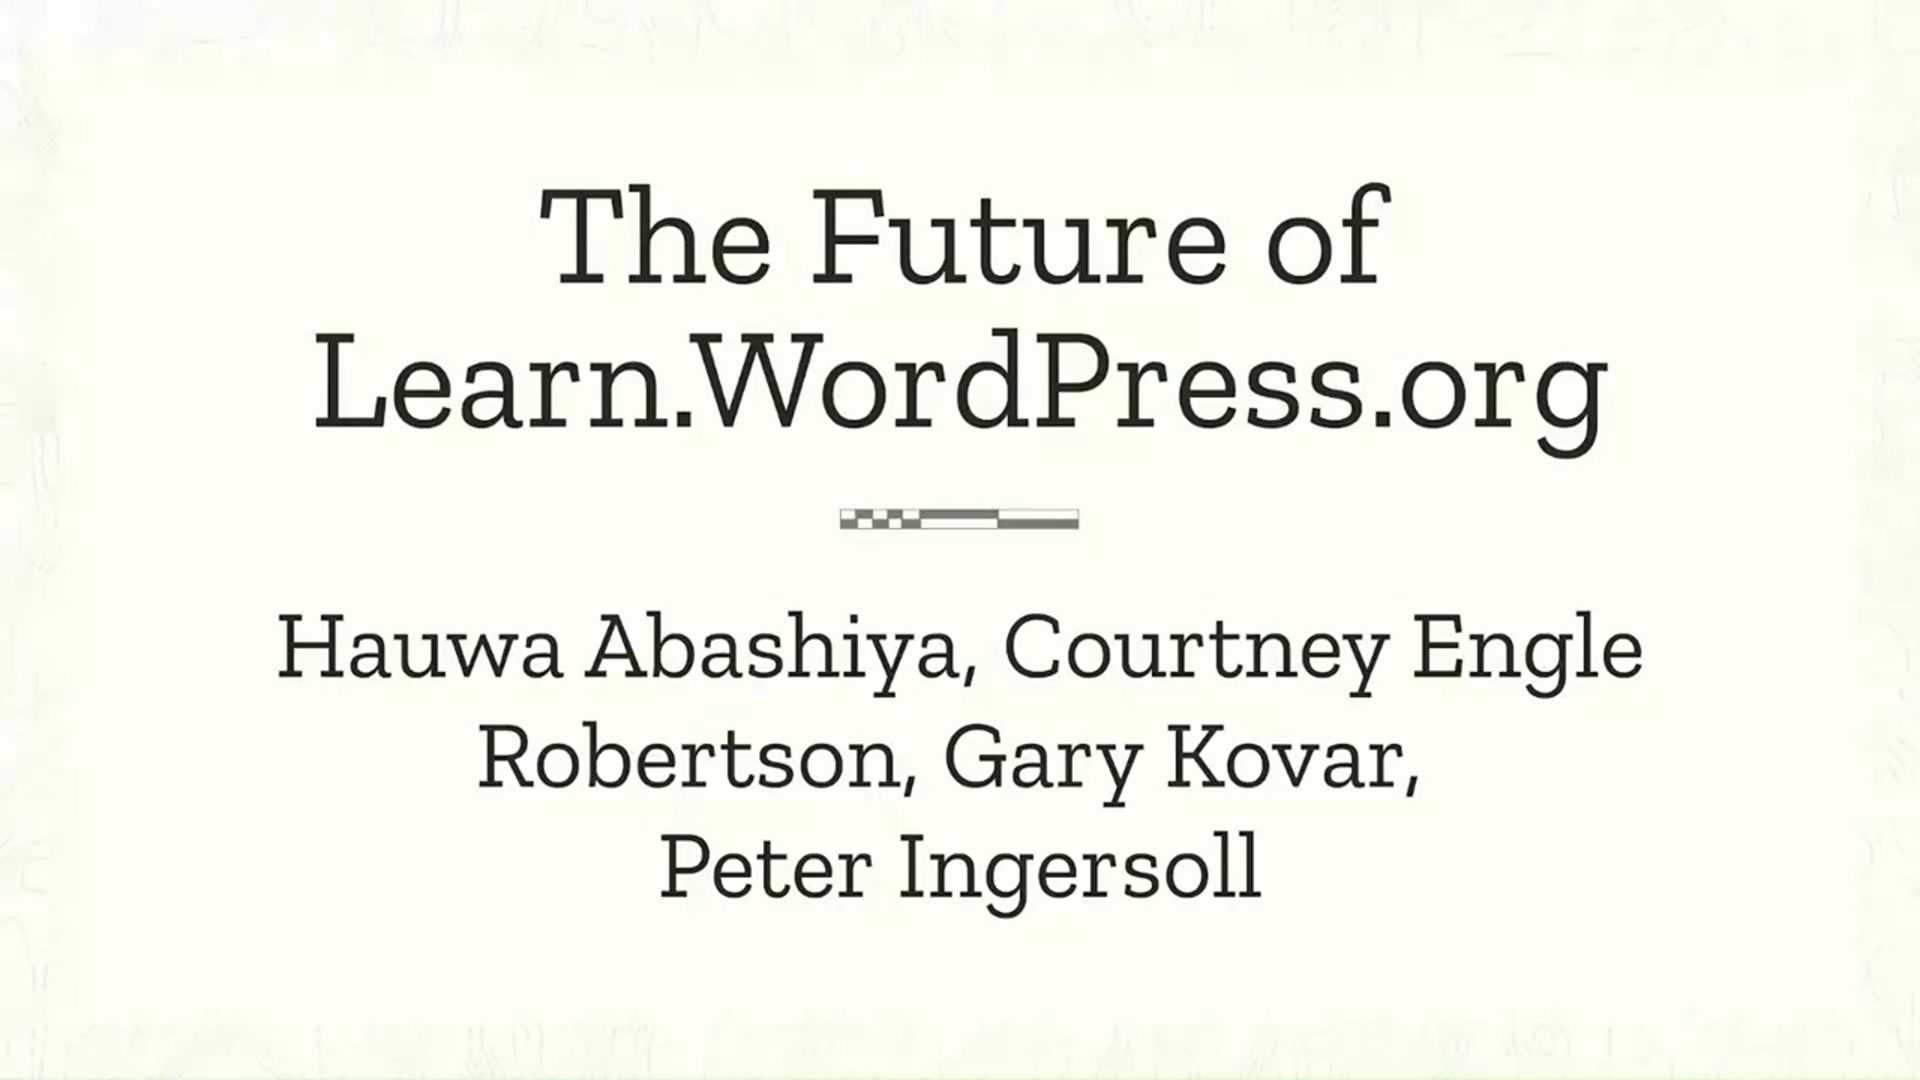 Courtney Engle Robertson, Peter Ingersoll, Hauwa Abashiya, Gary Kovar: The future of Learn.WordPress.org: Investing in learner achievements